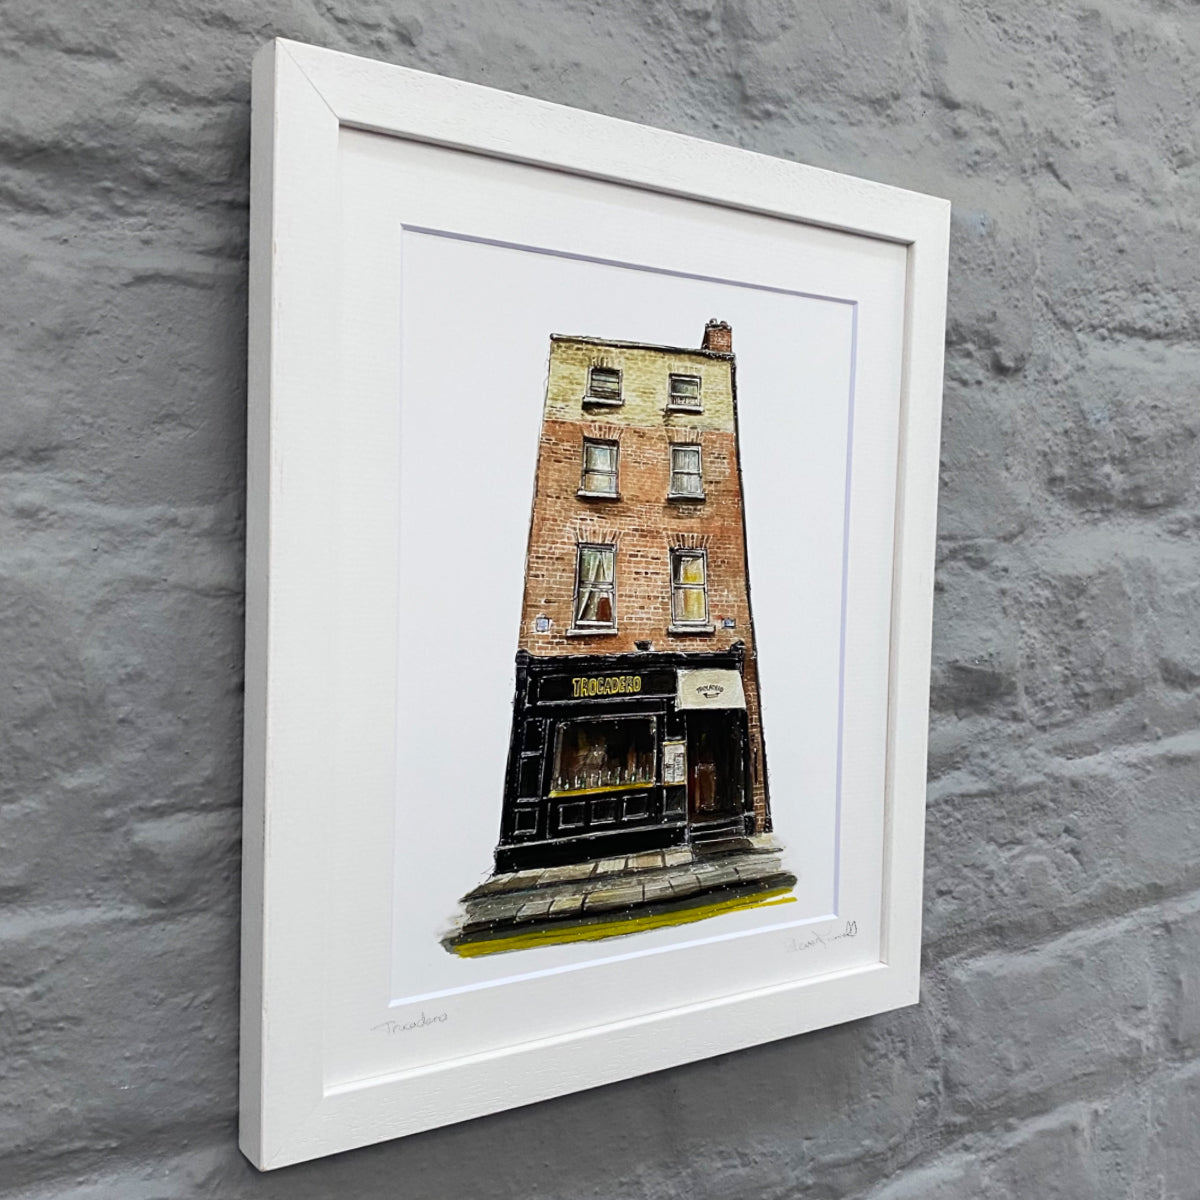 Framed-print-of-Trocadero-restaurant-Dublin-Pubs